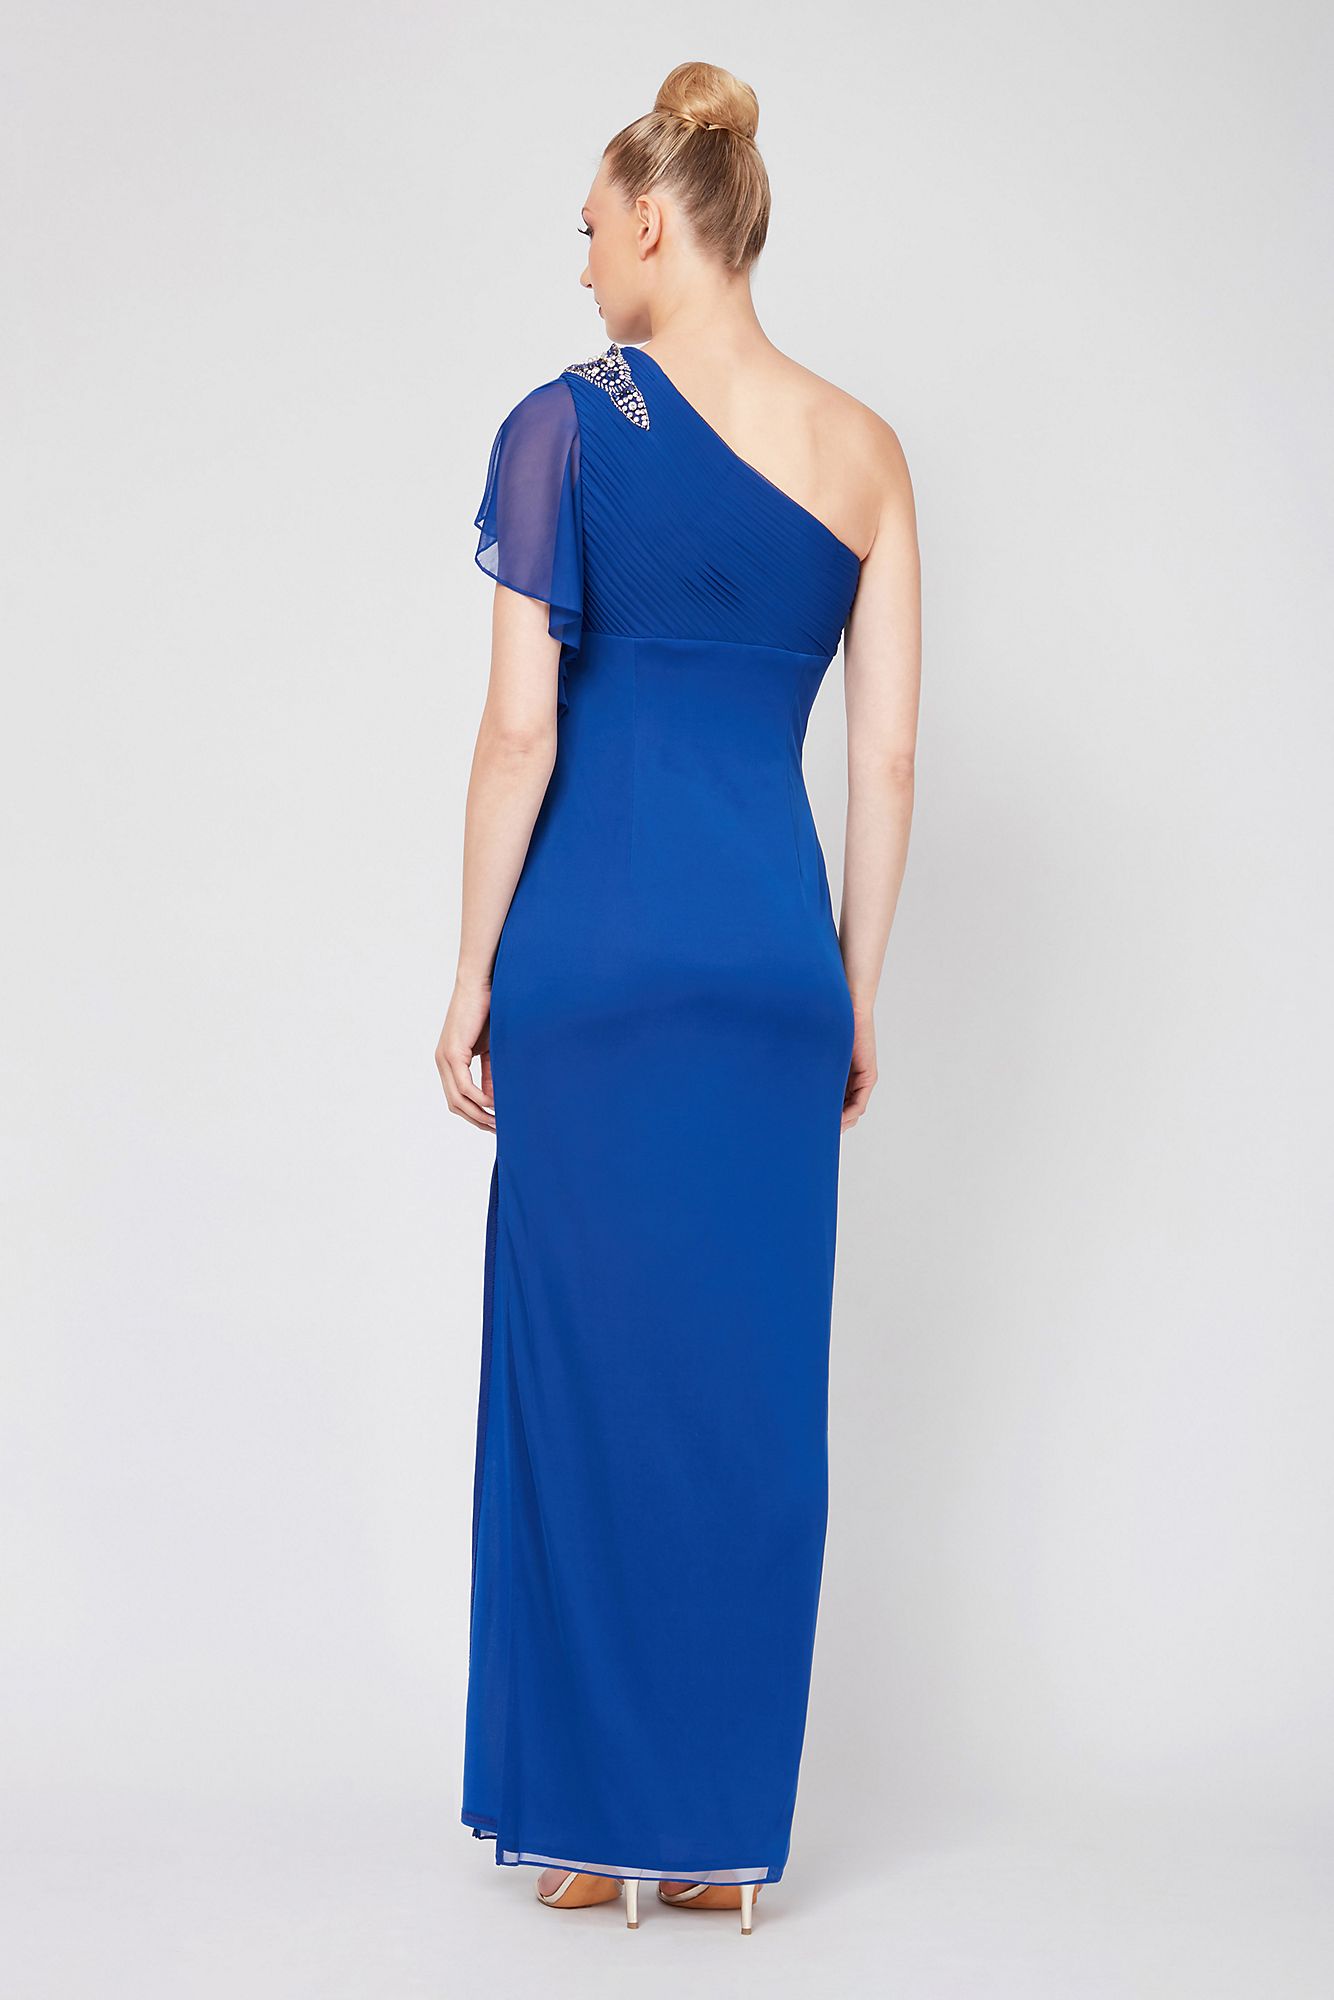 Elegant New 7132132 One-Shoulder Ruched Sheath Dress with Embellishment